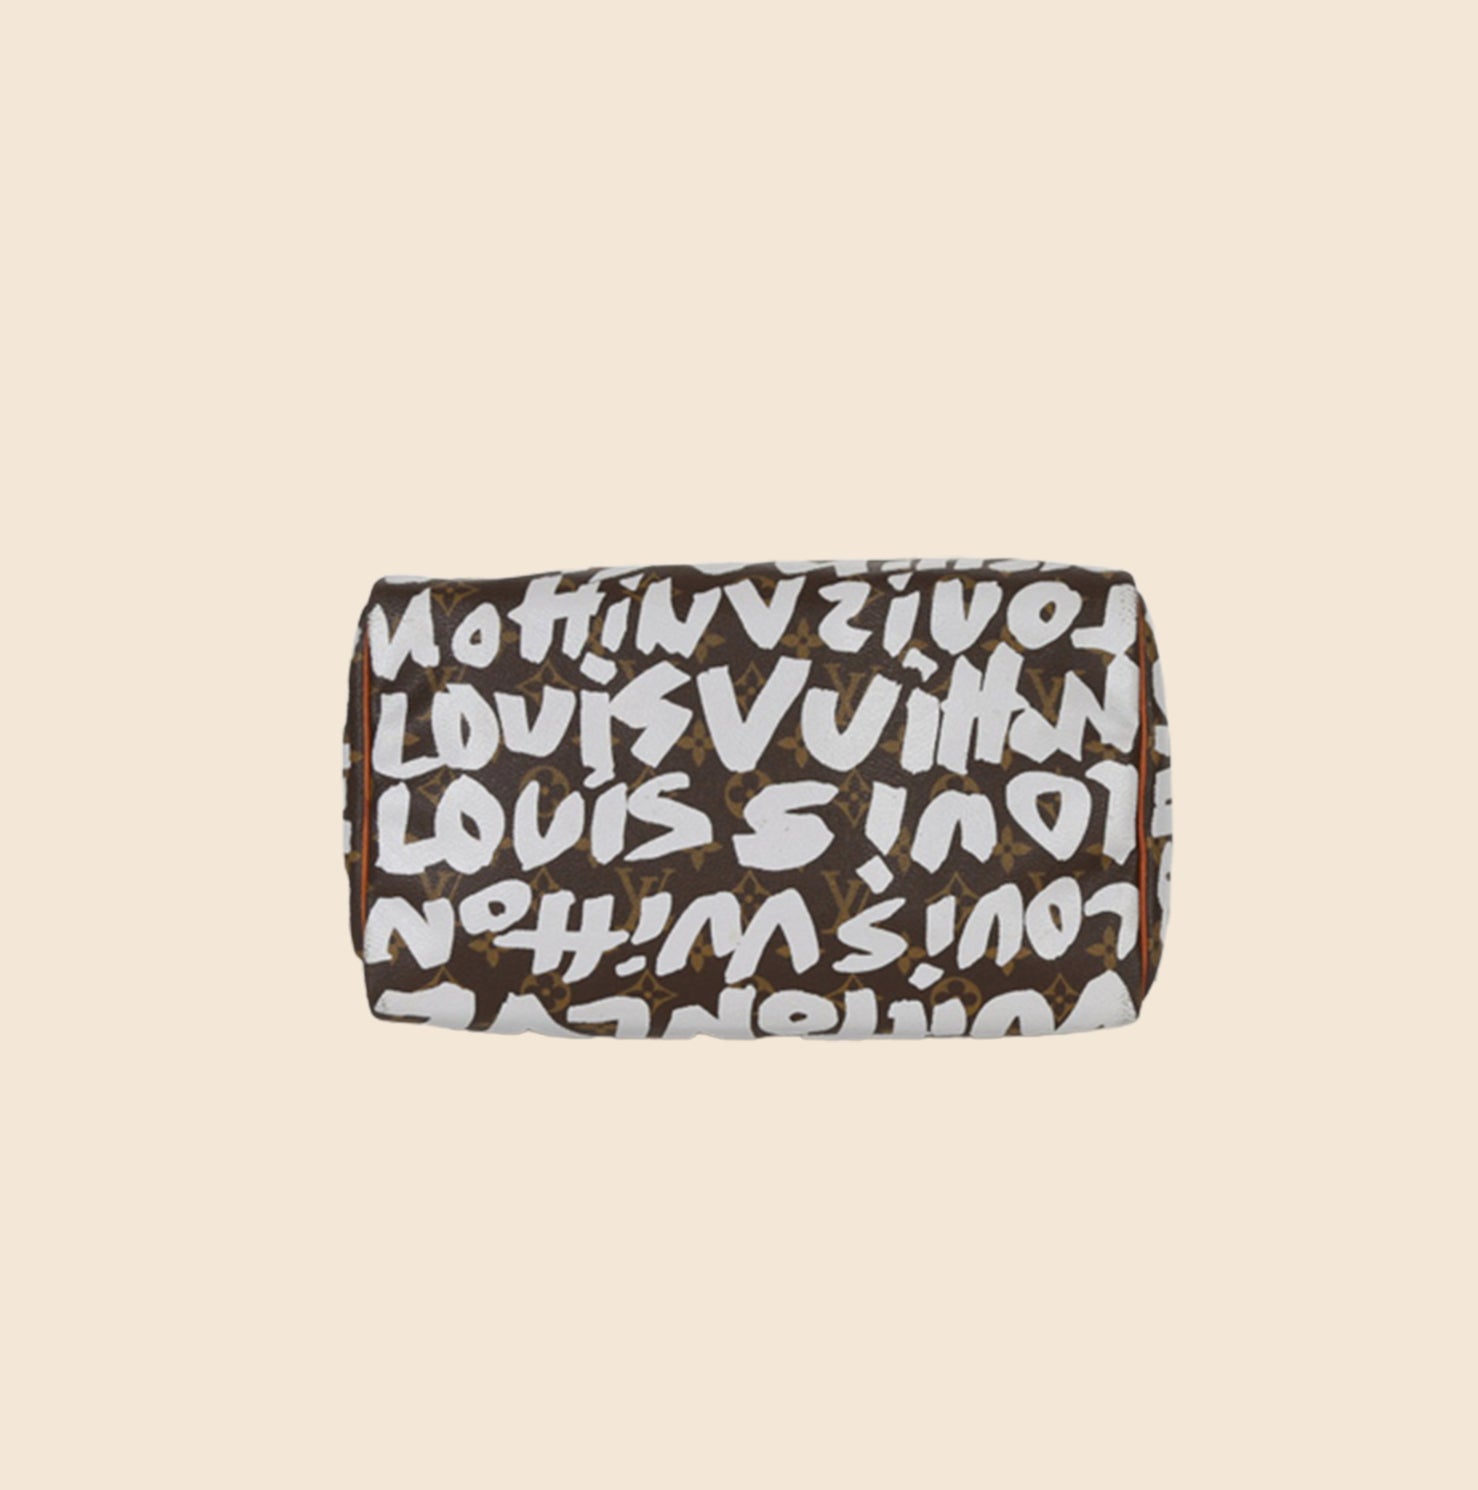 FWRD Renew Louis Vuitton Monogram Graffiti Speedy Bag in Brown